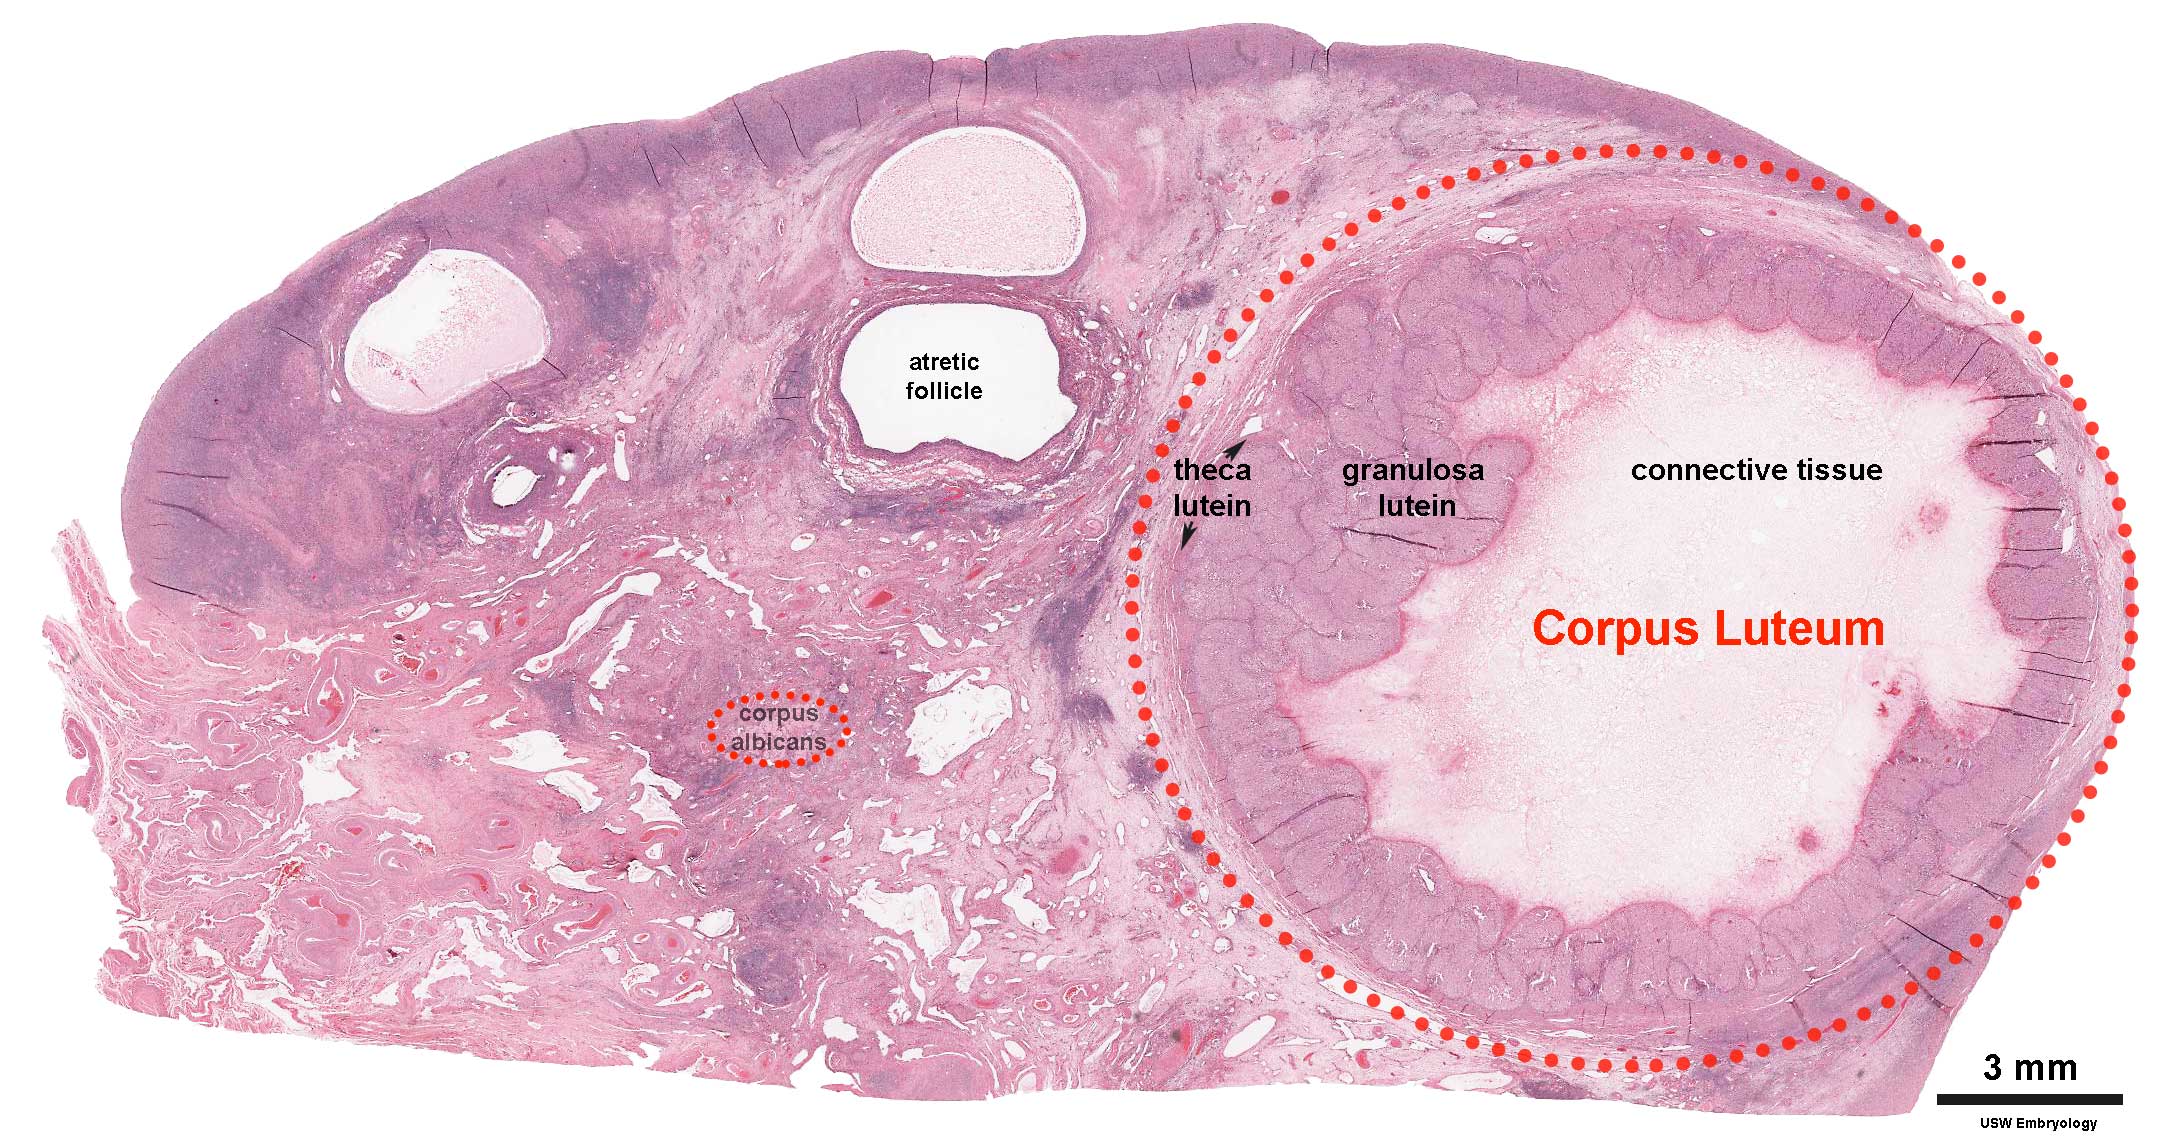 In the mature or graafian follicle of the ovary